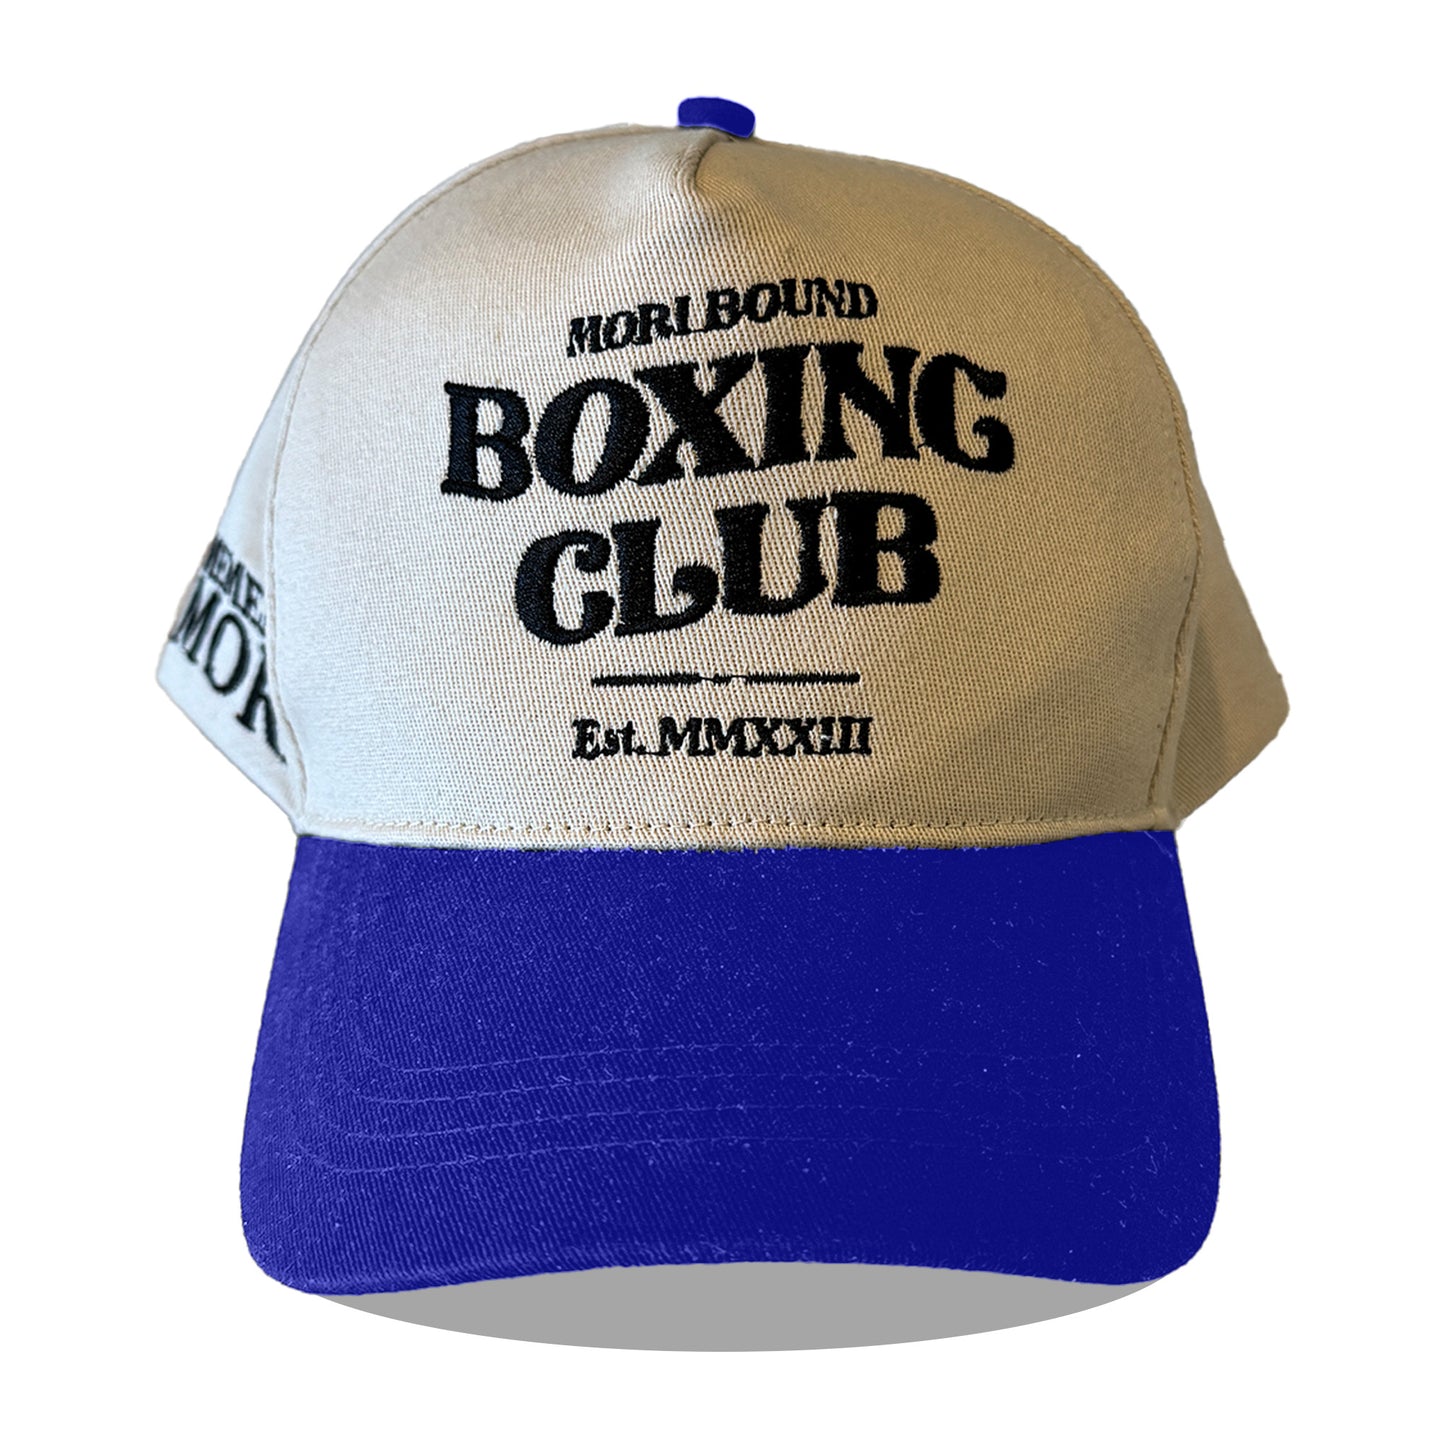 Boxing Club Hat - Blue